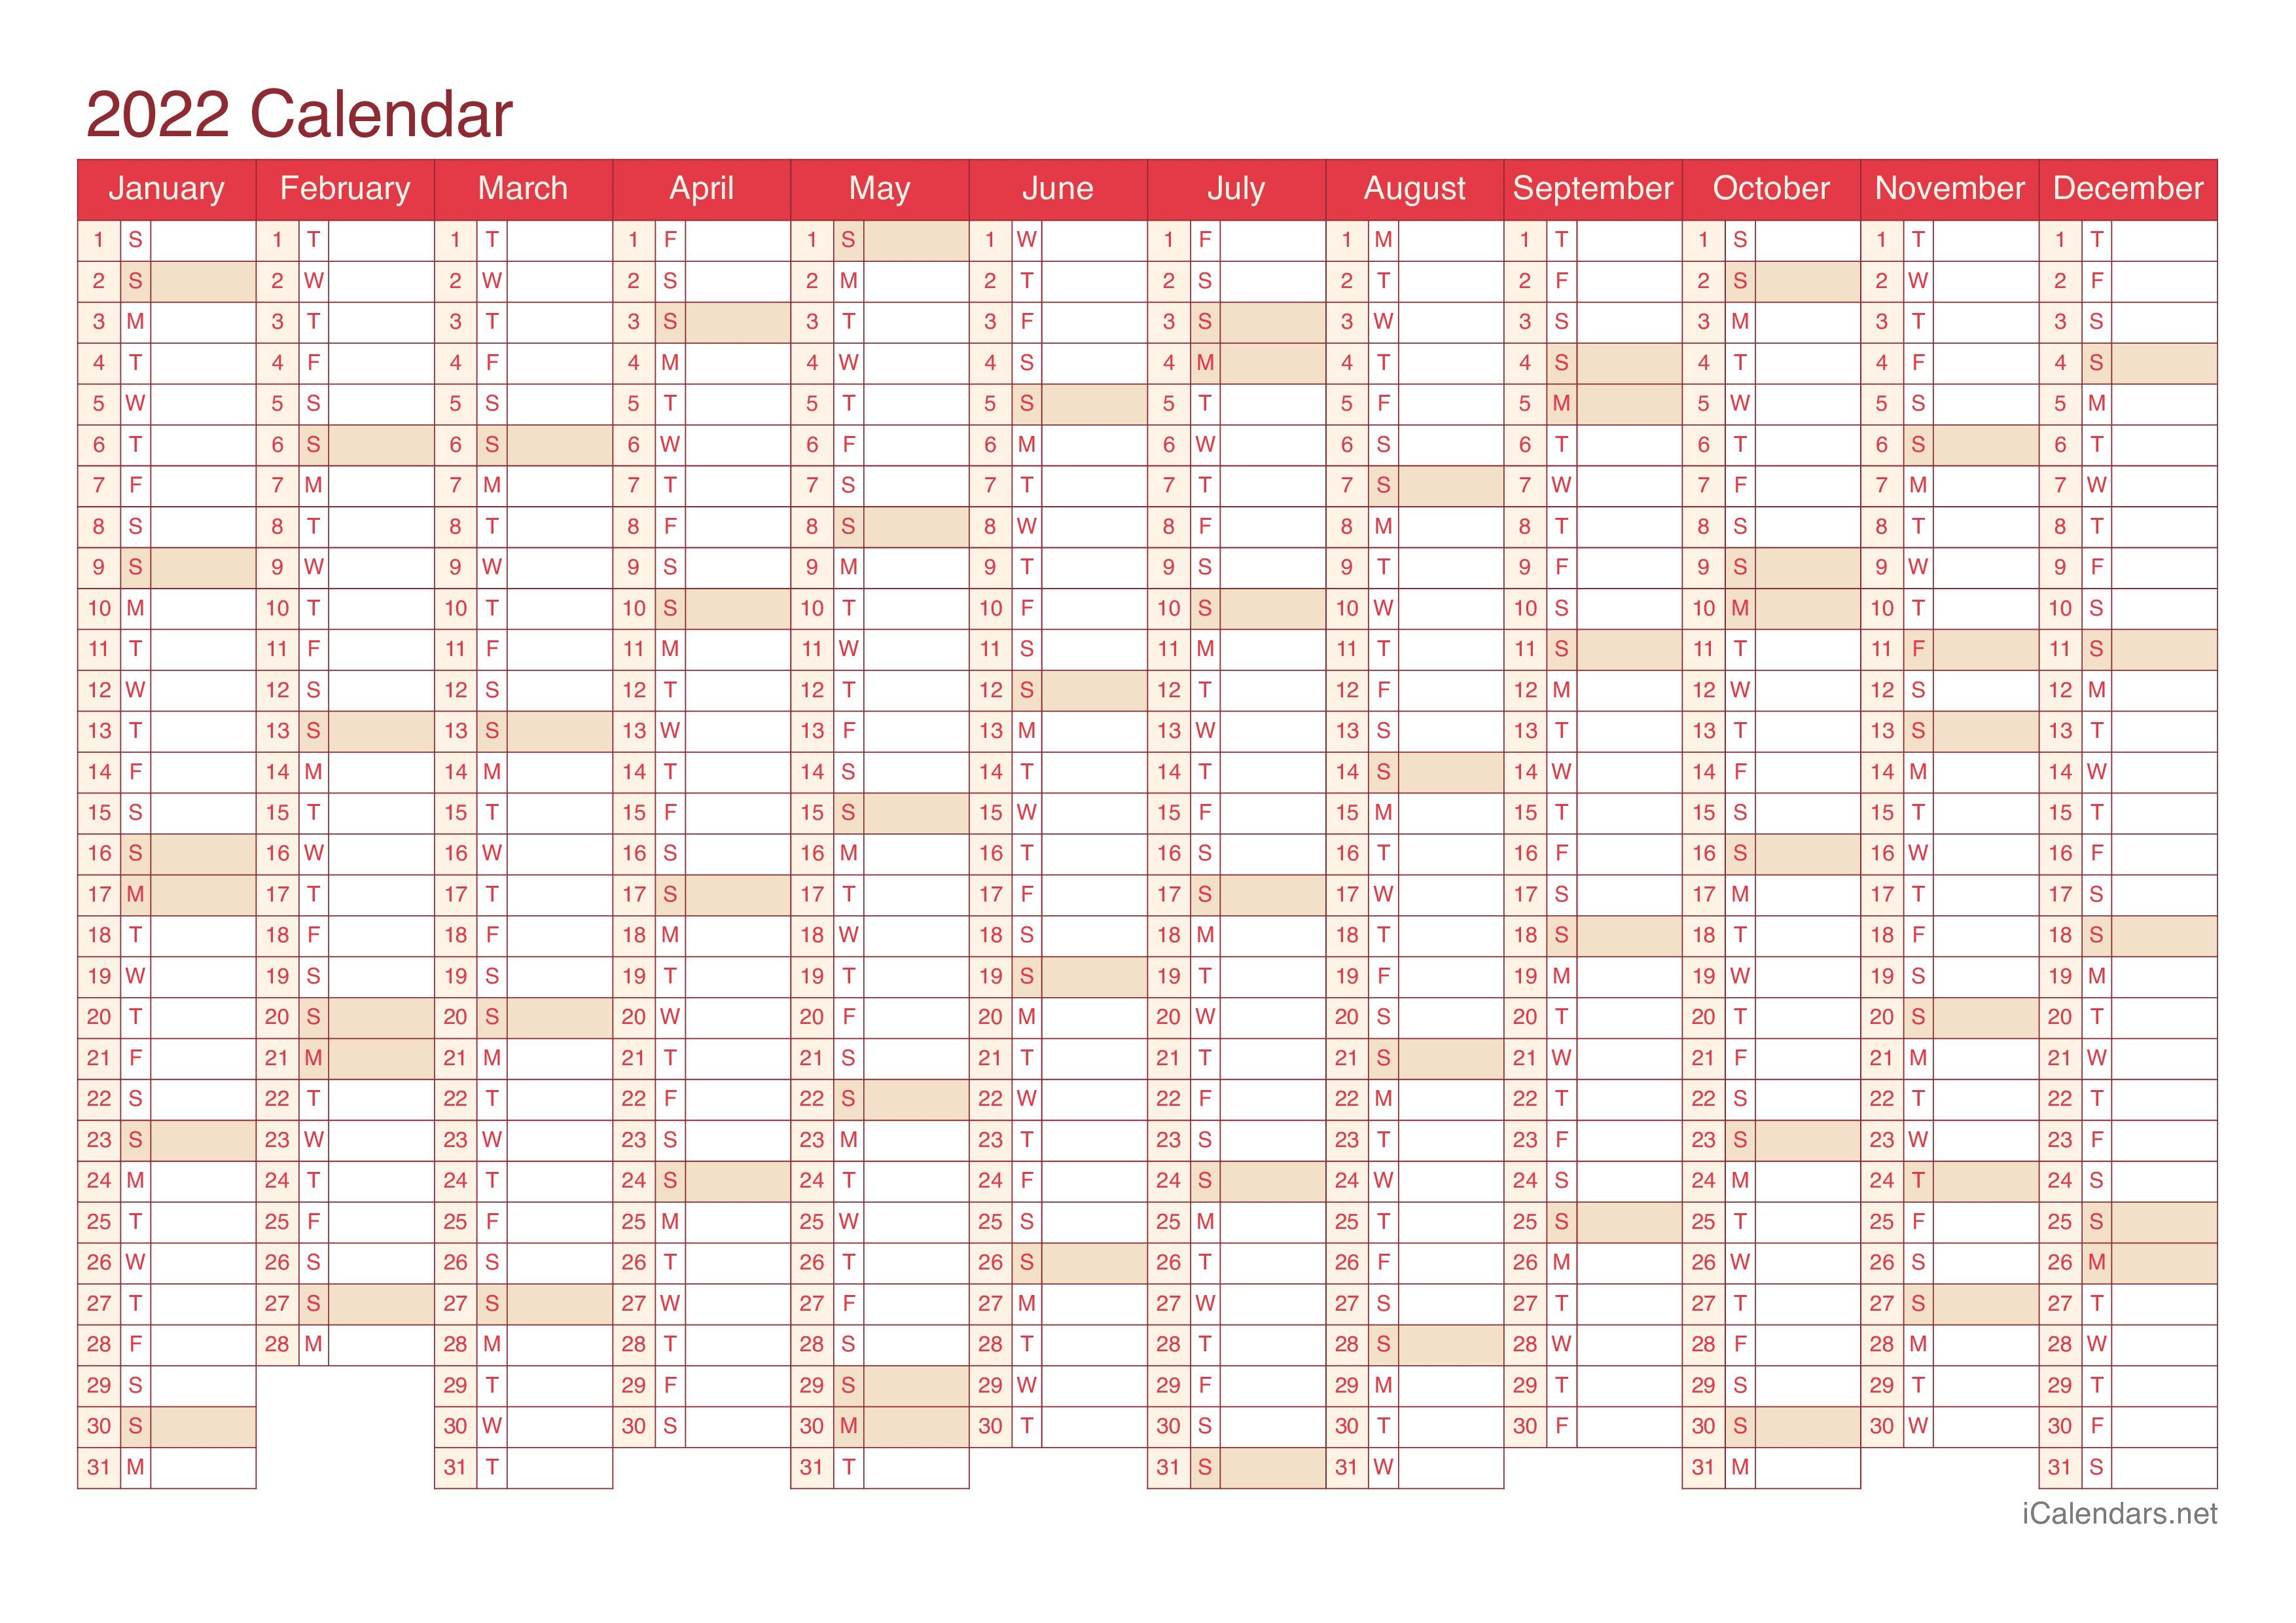 2022 Calendar - Cherry